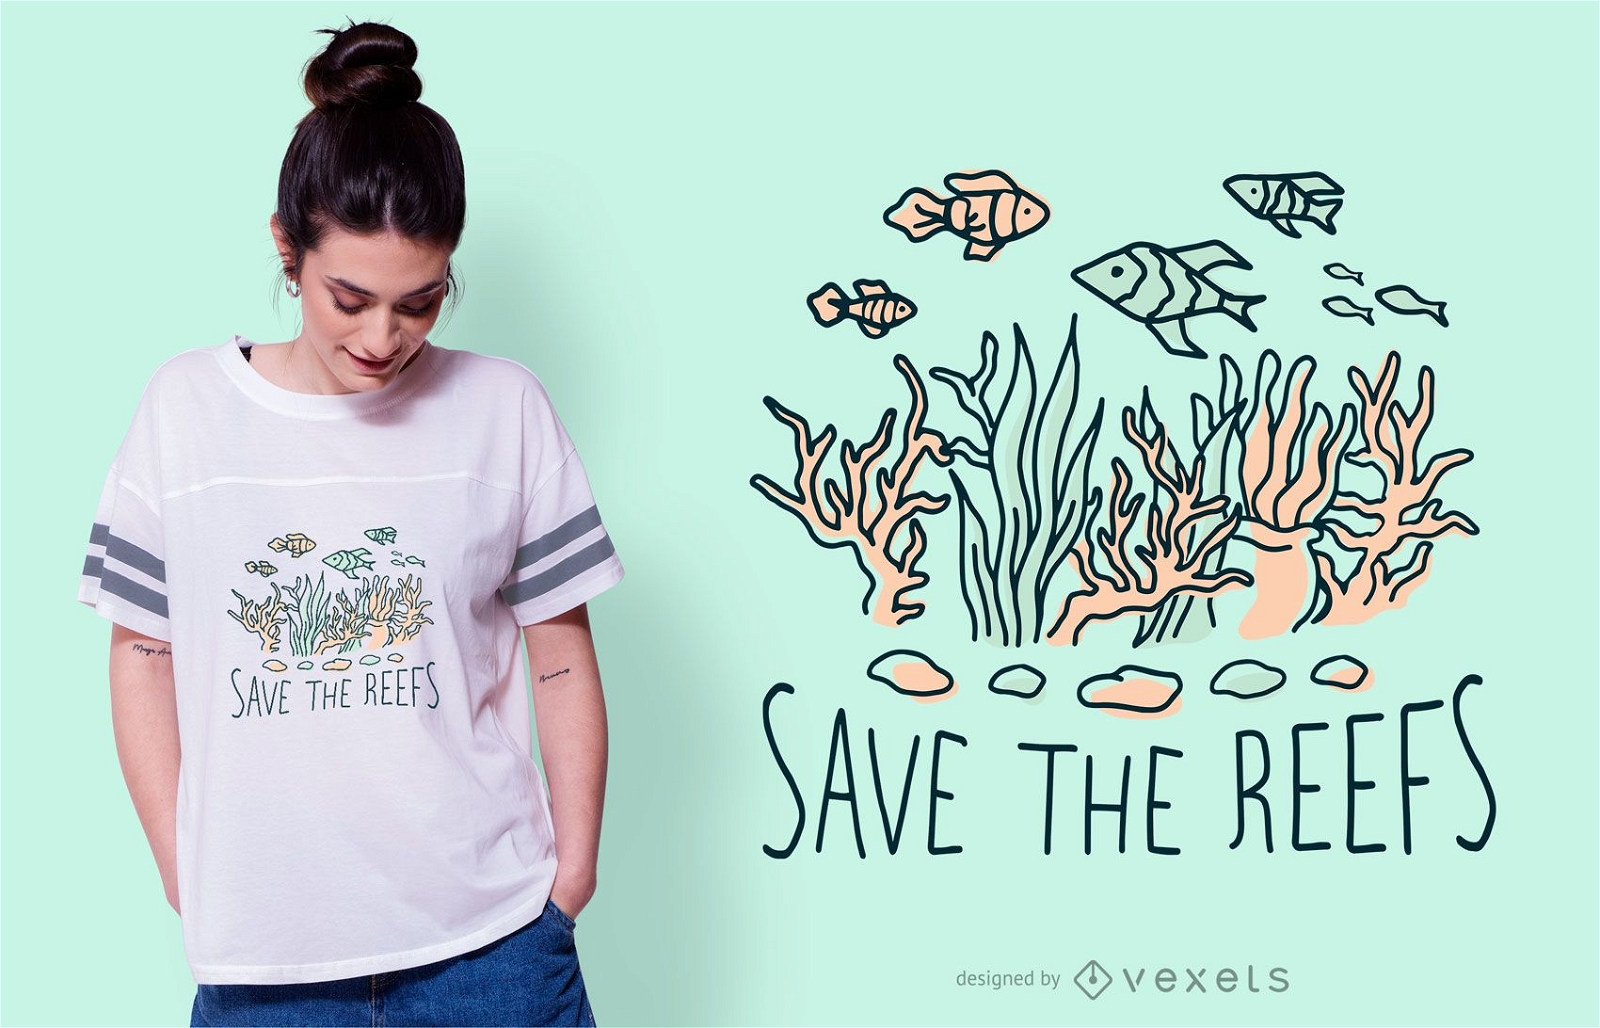 Save the reefs t-shirt design